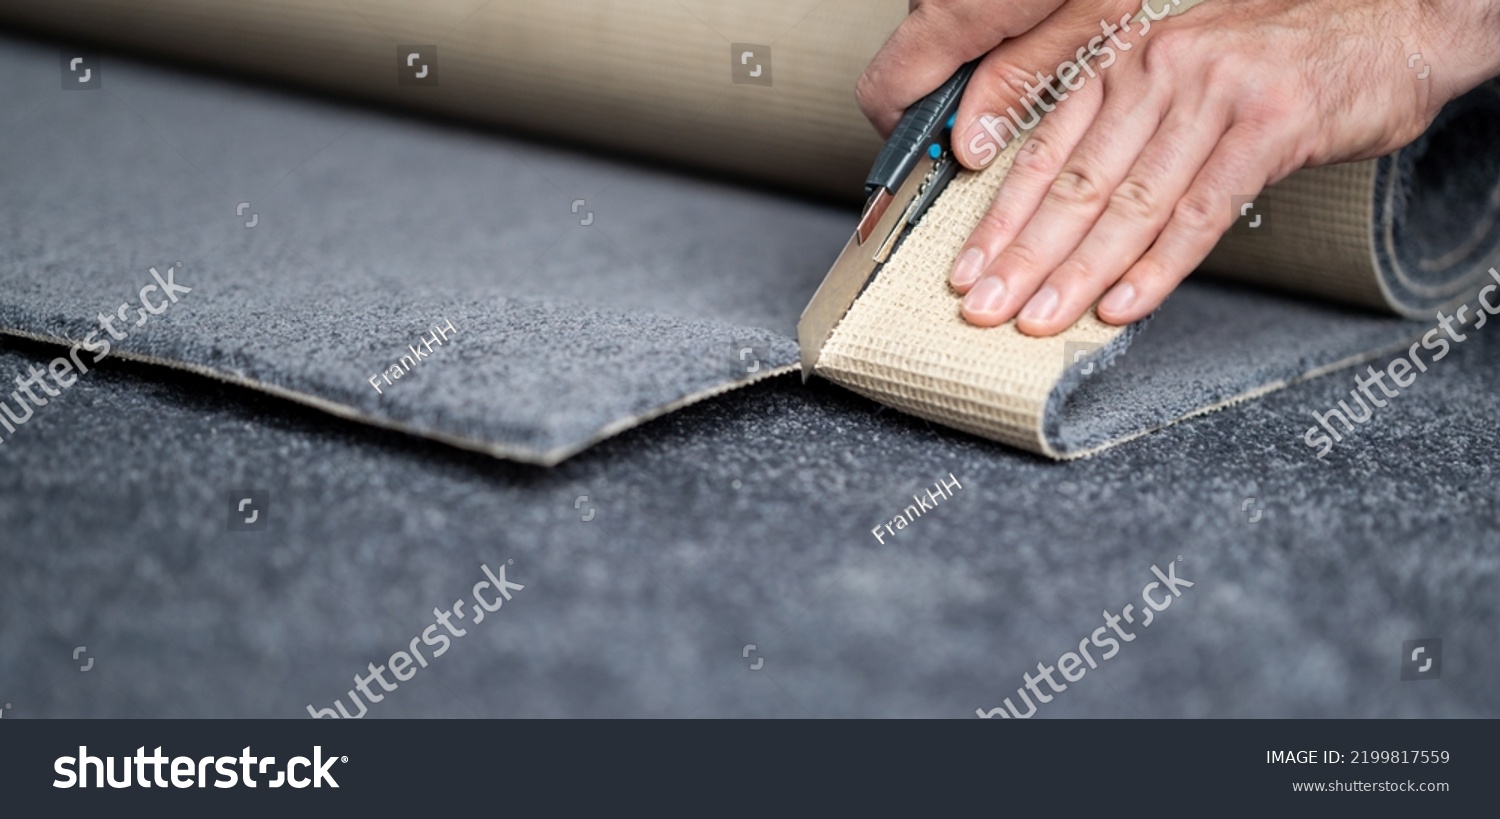 Handyman cutting a new carpet with a carpet cutter. #2199817559